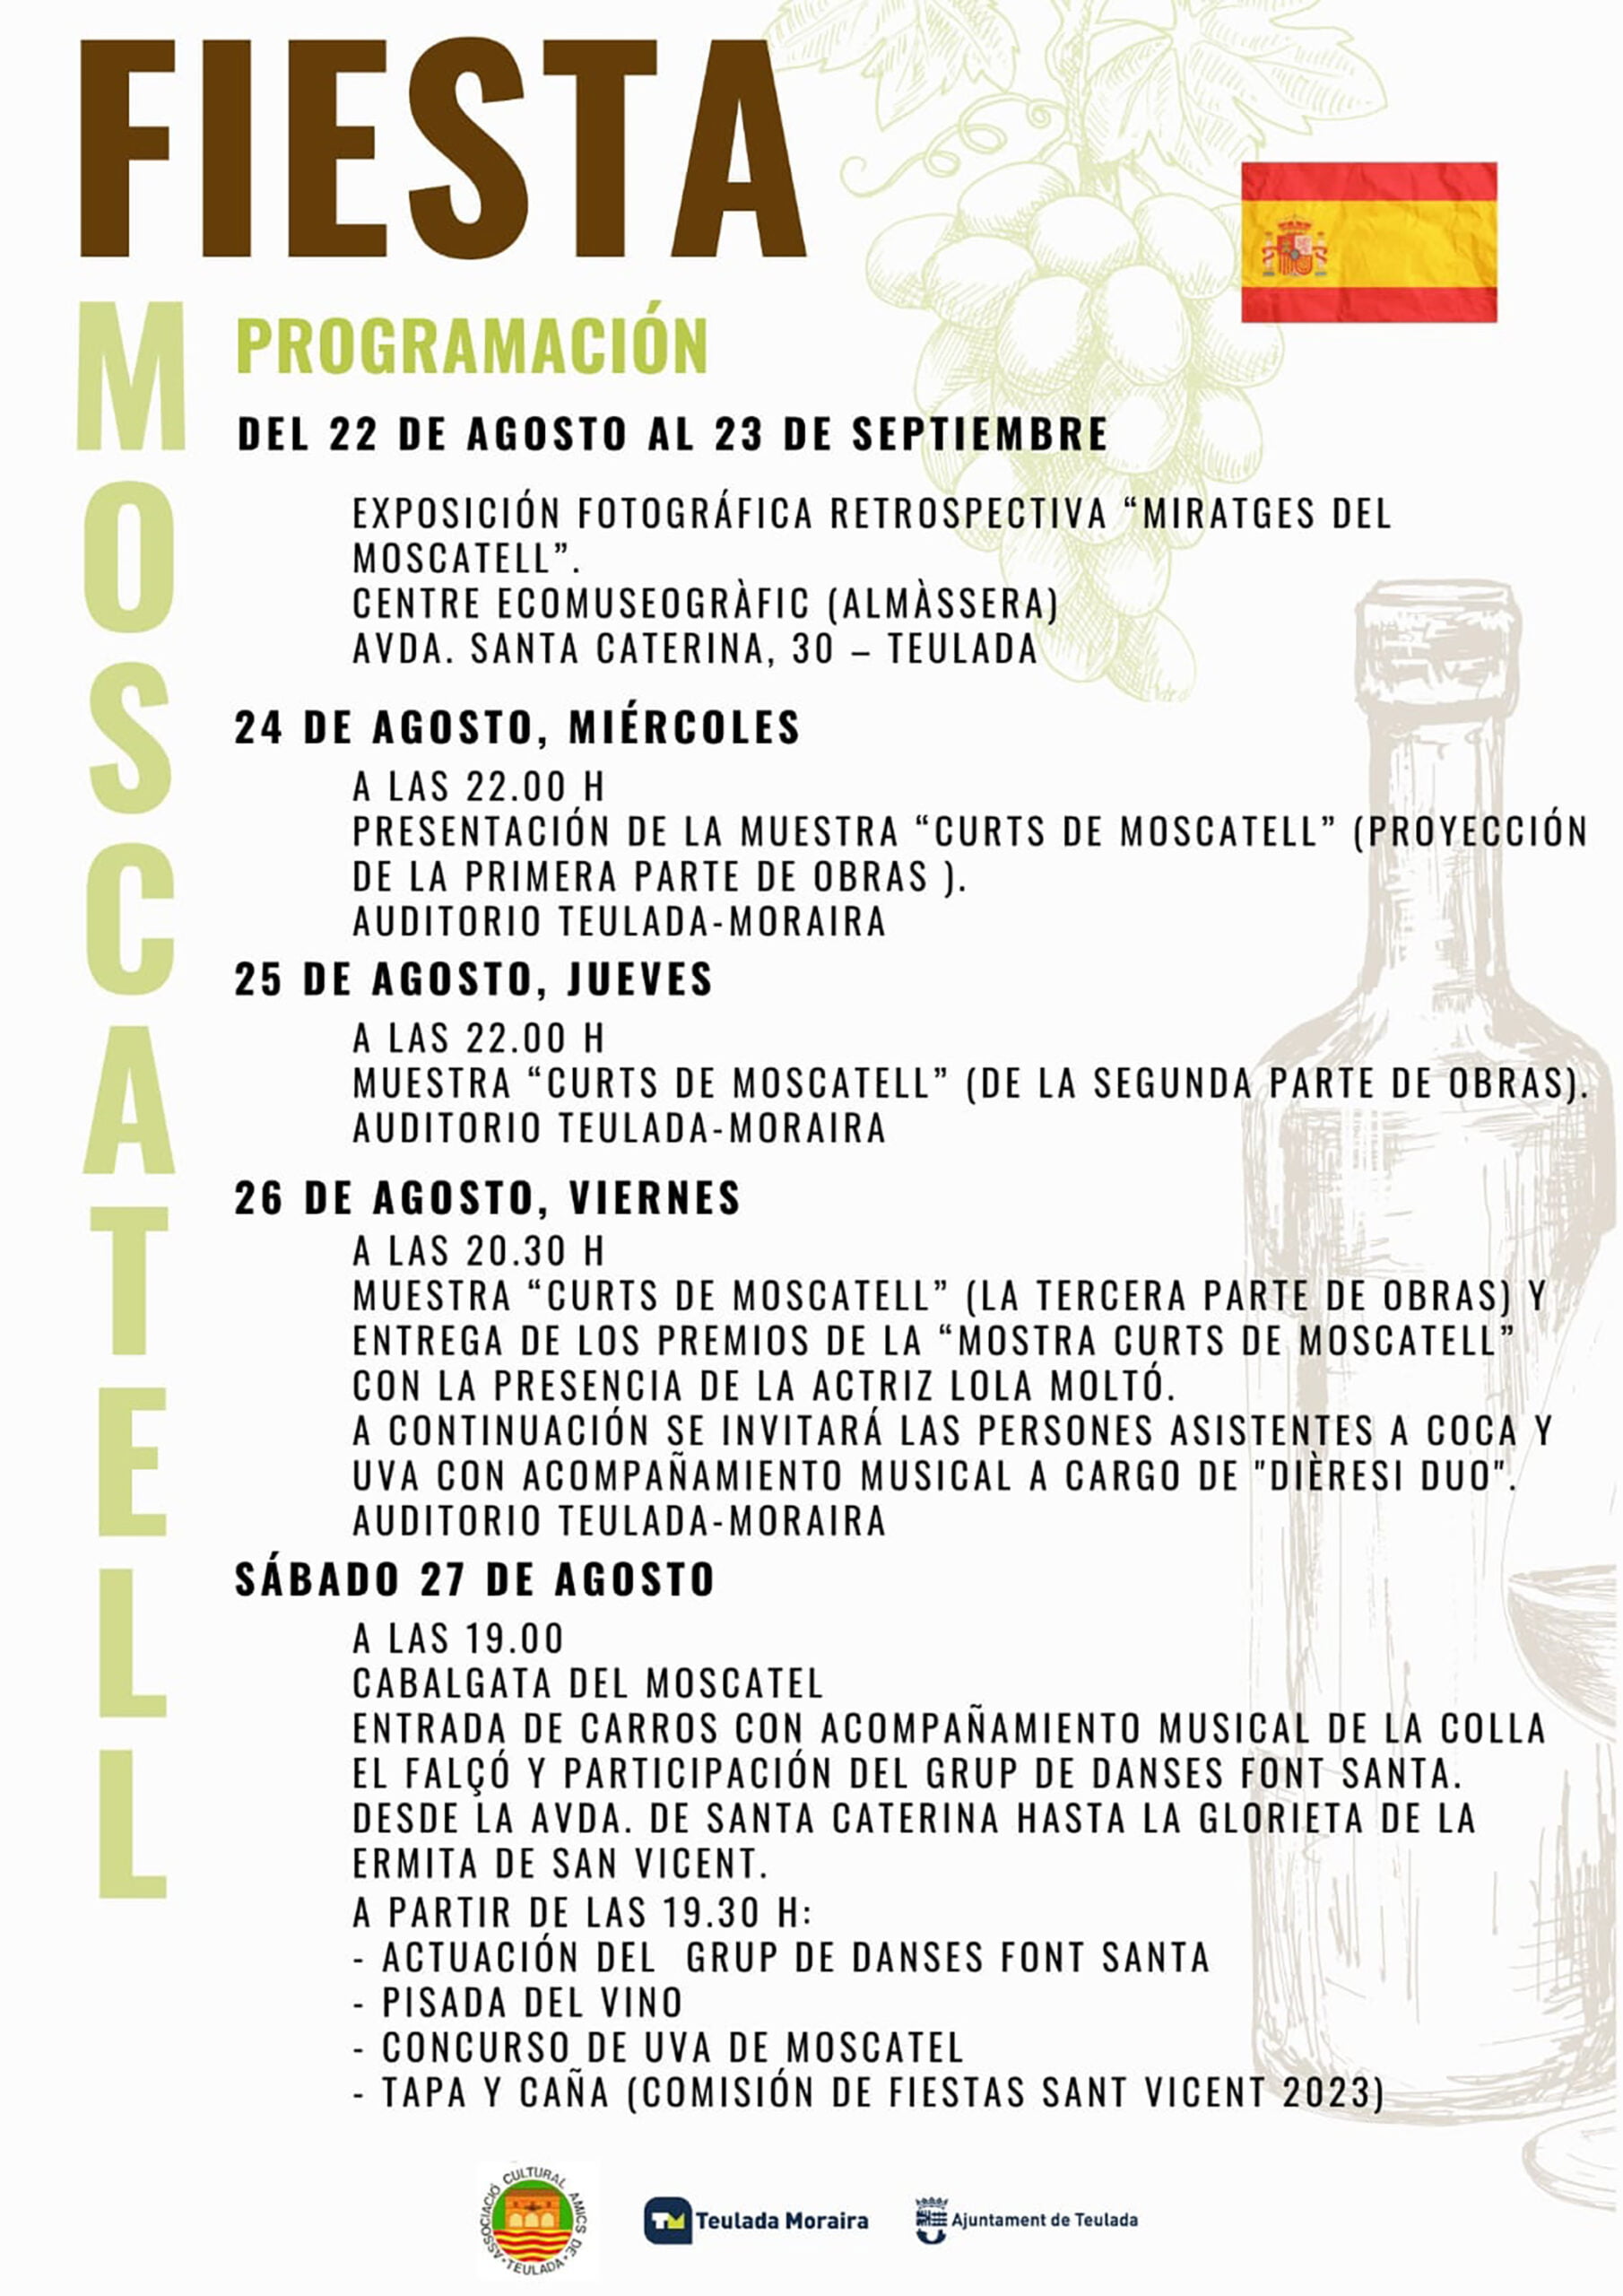 Primera parte del programa de la Festa del Moscatell de Teulada-Moraira 2022 (Castellano)